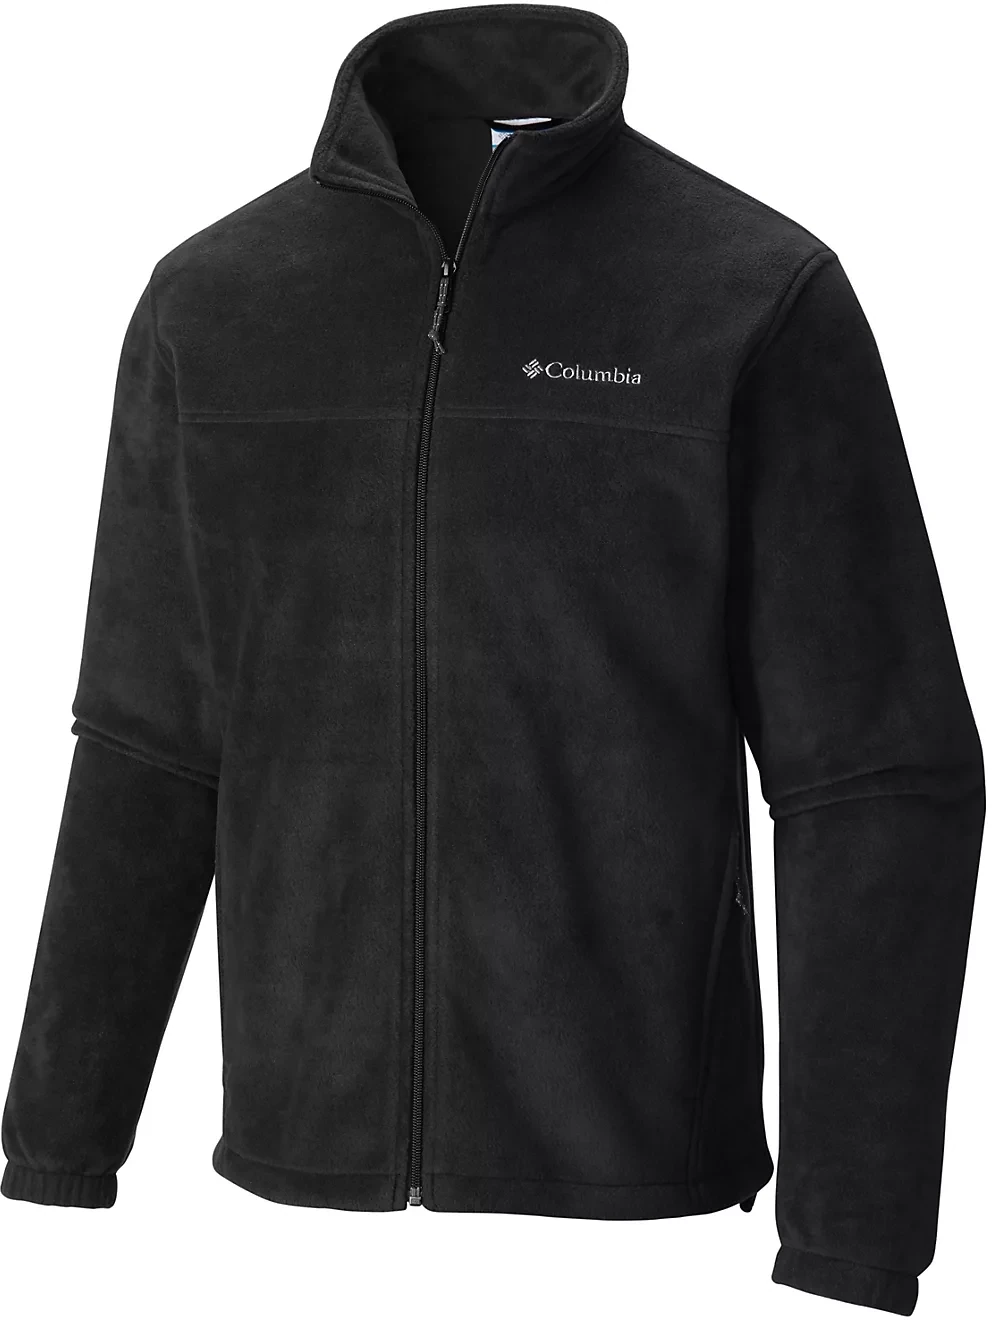 Unlock Wilderness' choice in the Mountain Hardwear Vs Columbia comparison, the Steens Mountain™ 2.0 Full Zip Fleece Jacket by Columbia